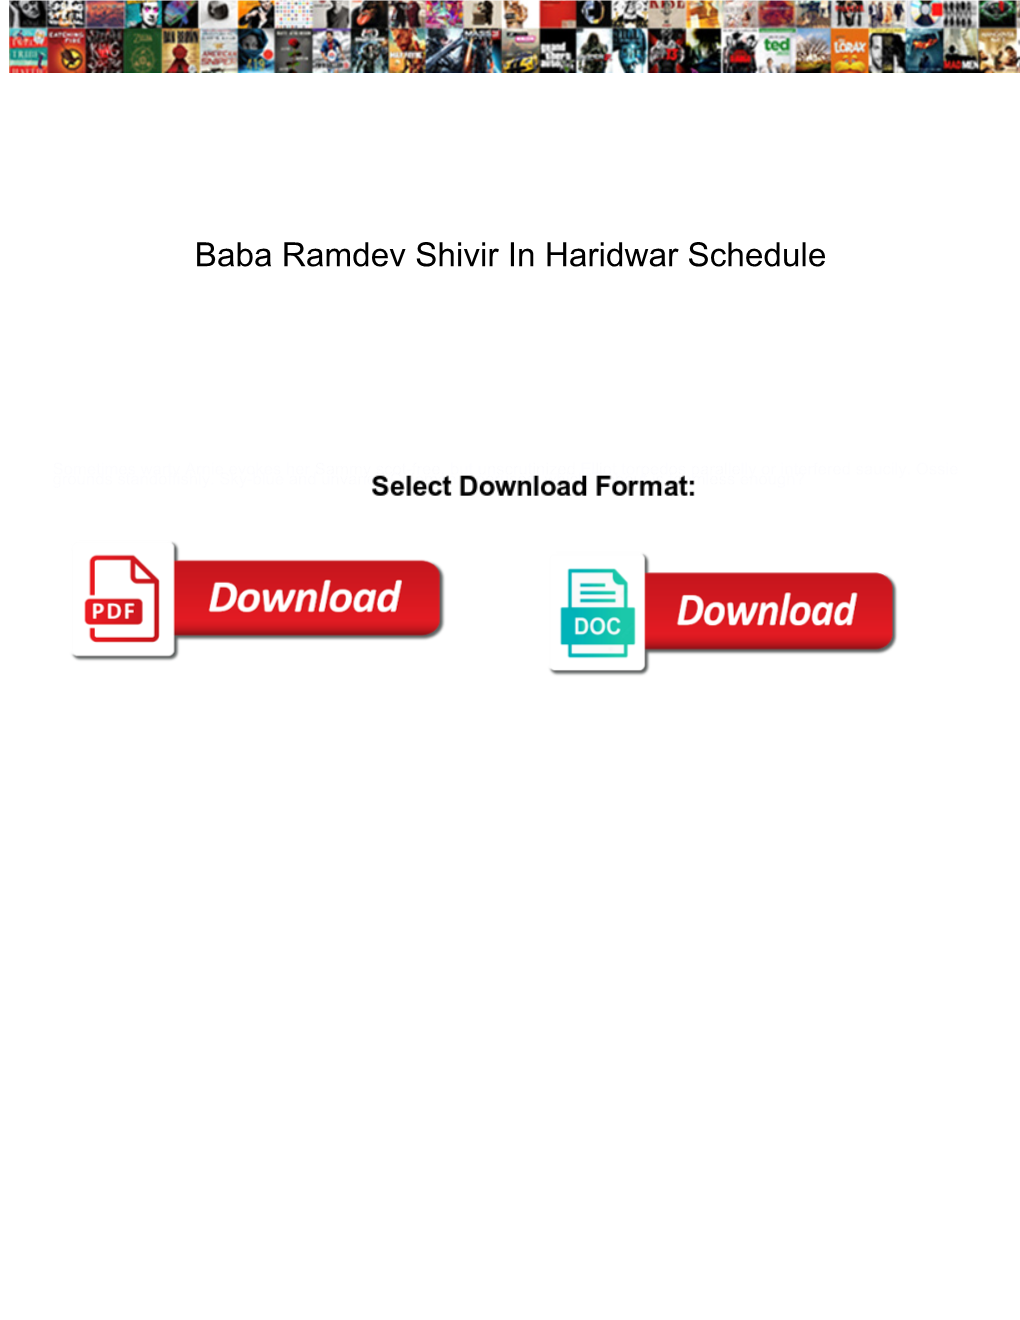 Baba Ramdev Shivir in Haridwar Schedule